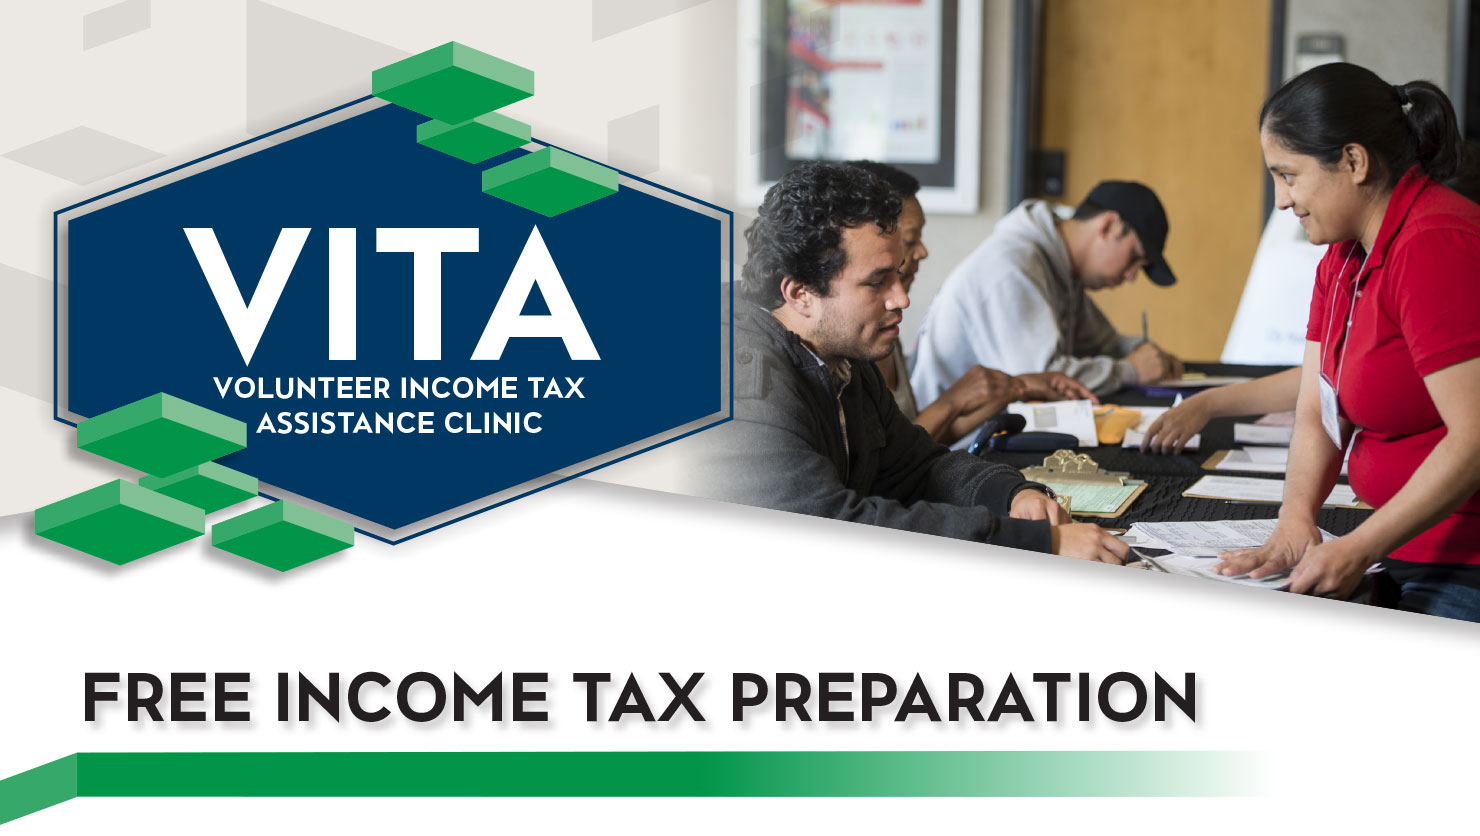 VITA - Volunteer Income Tax Assistance Clinic - Free Income Tax Preparation